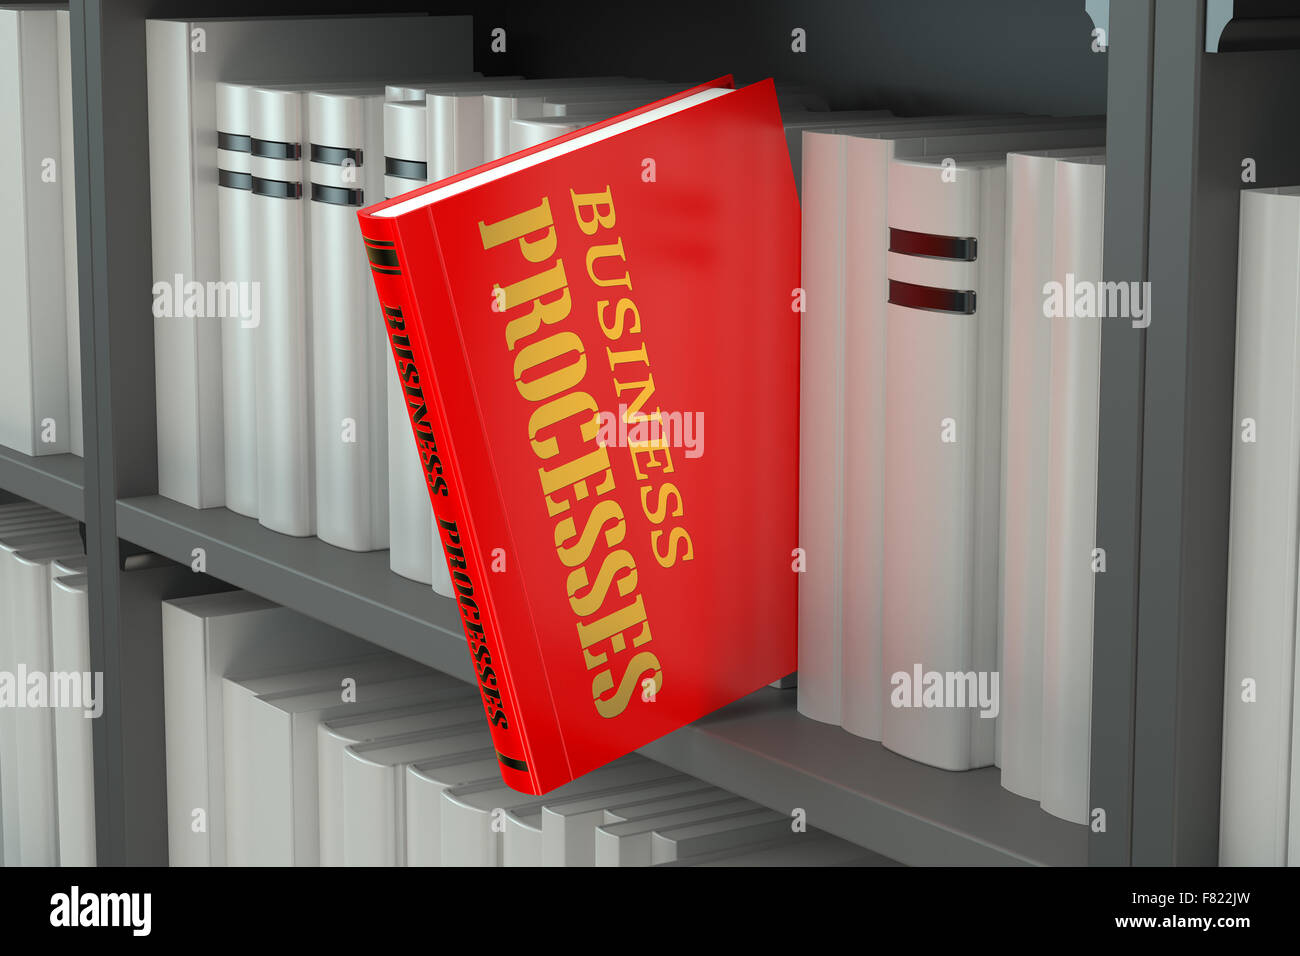 Business Processes concept on the bookshelf Stock Photo